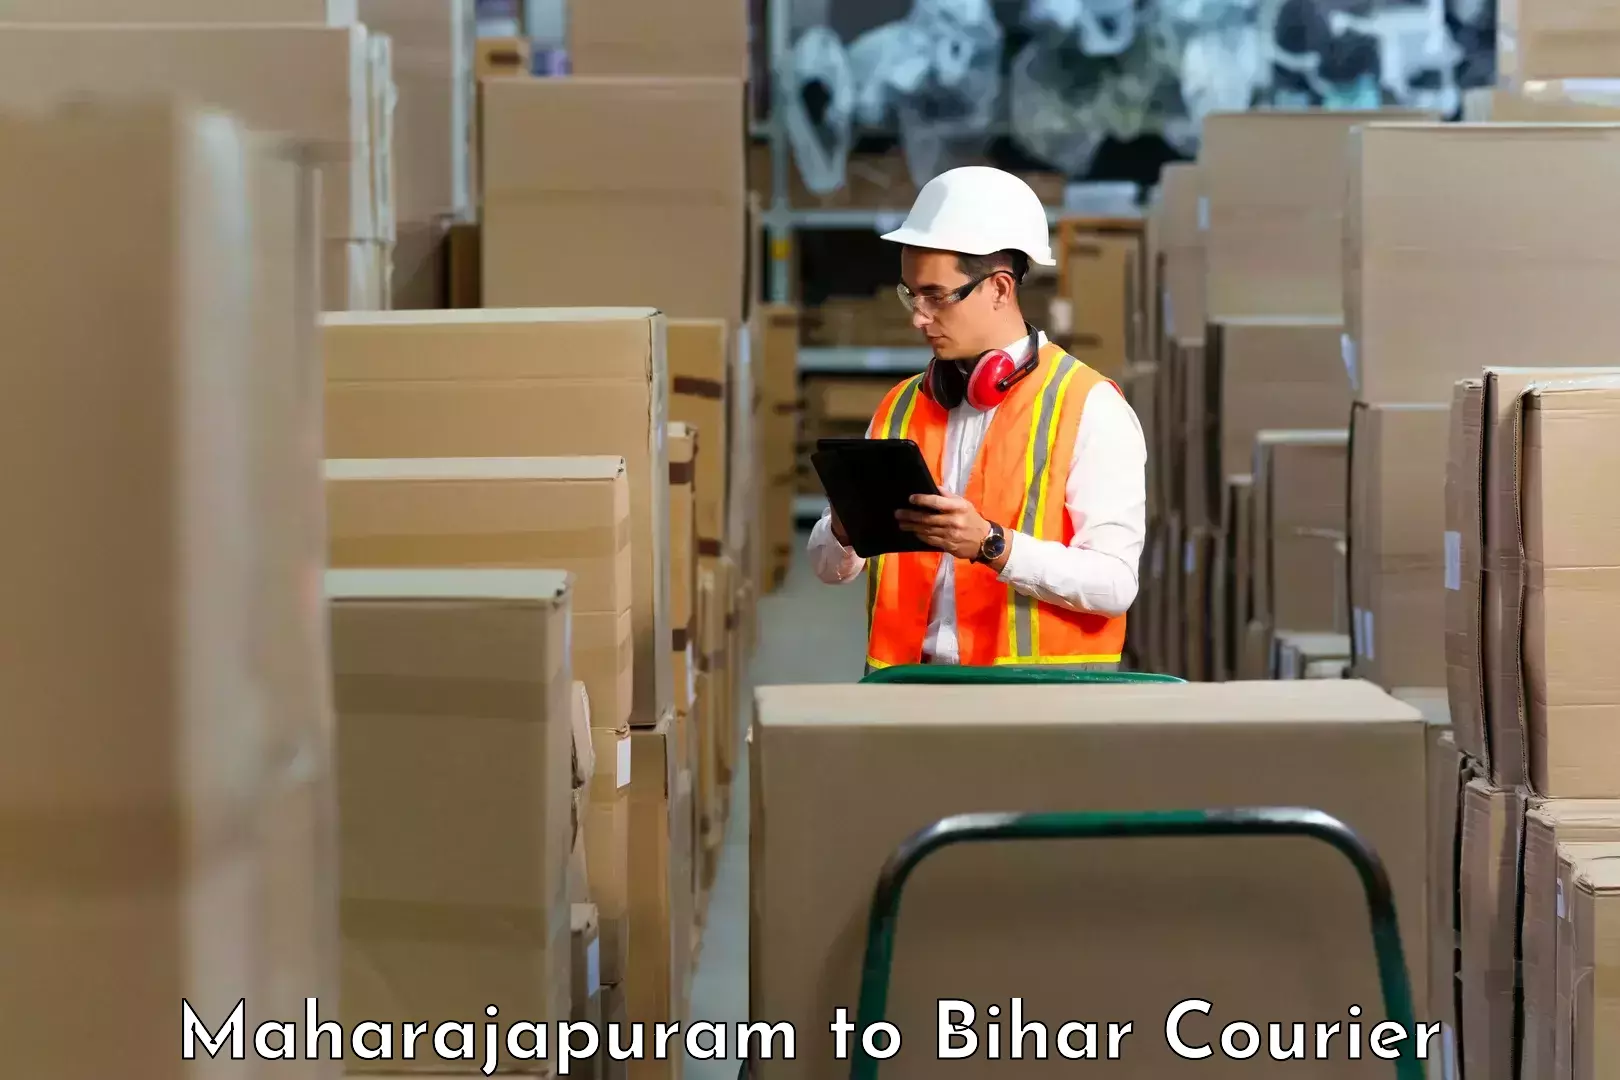 High-capacity parcel service Maharajapuram to Bhojpur